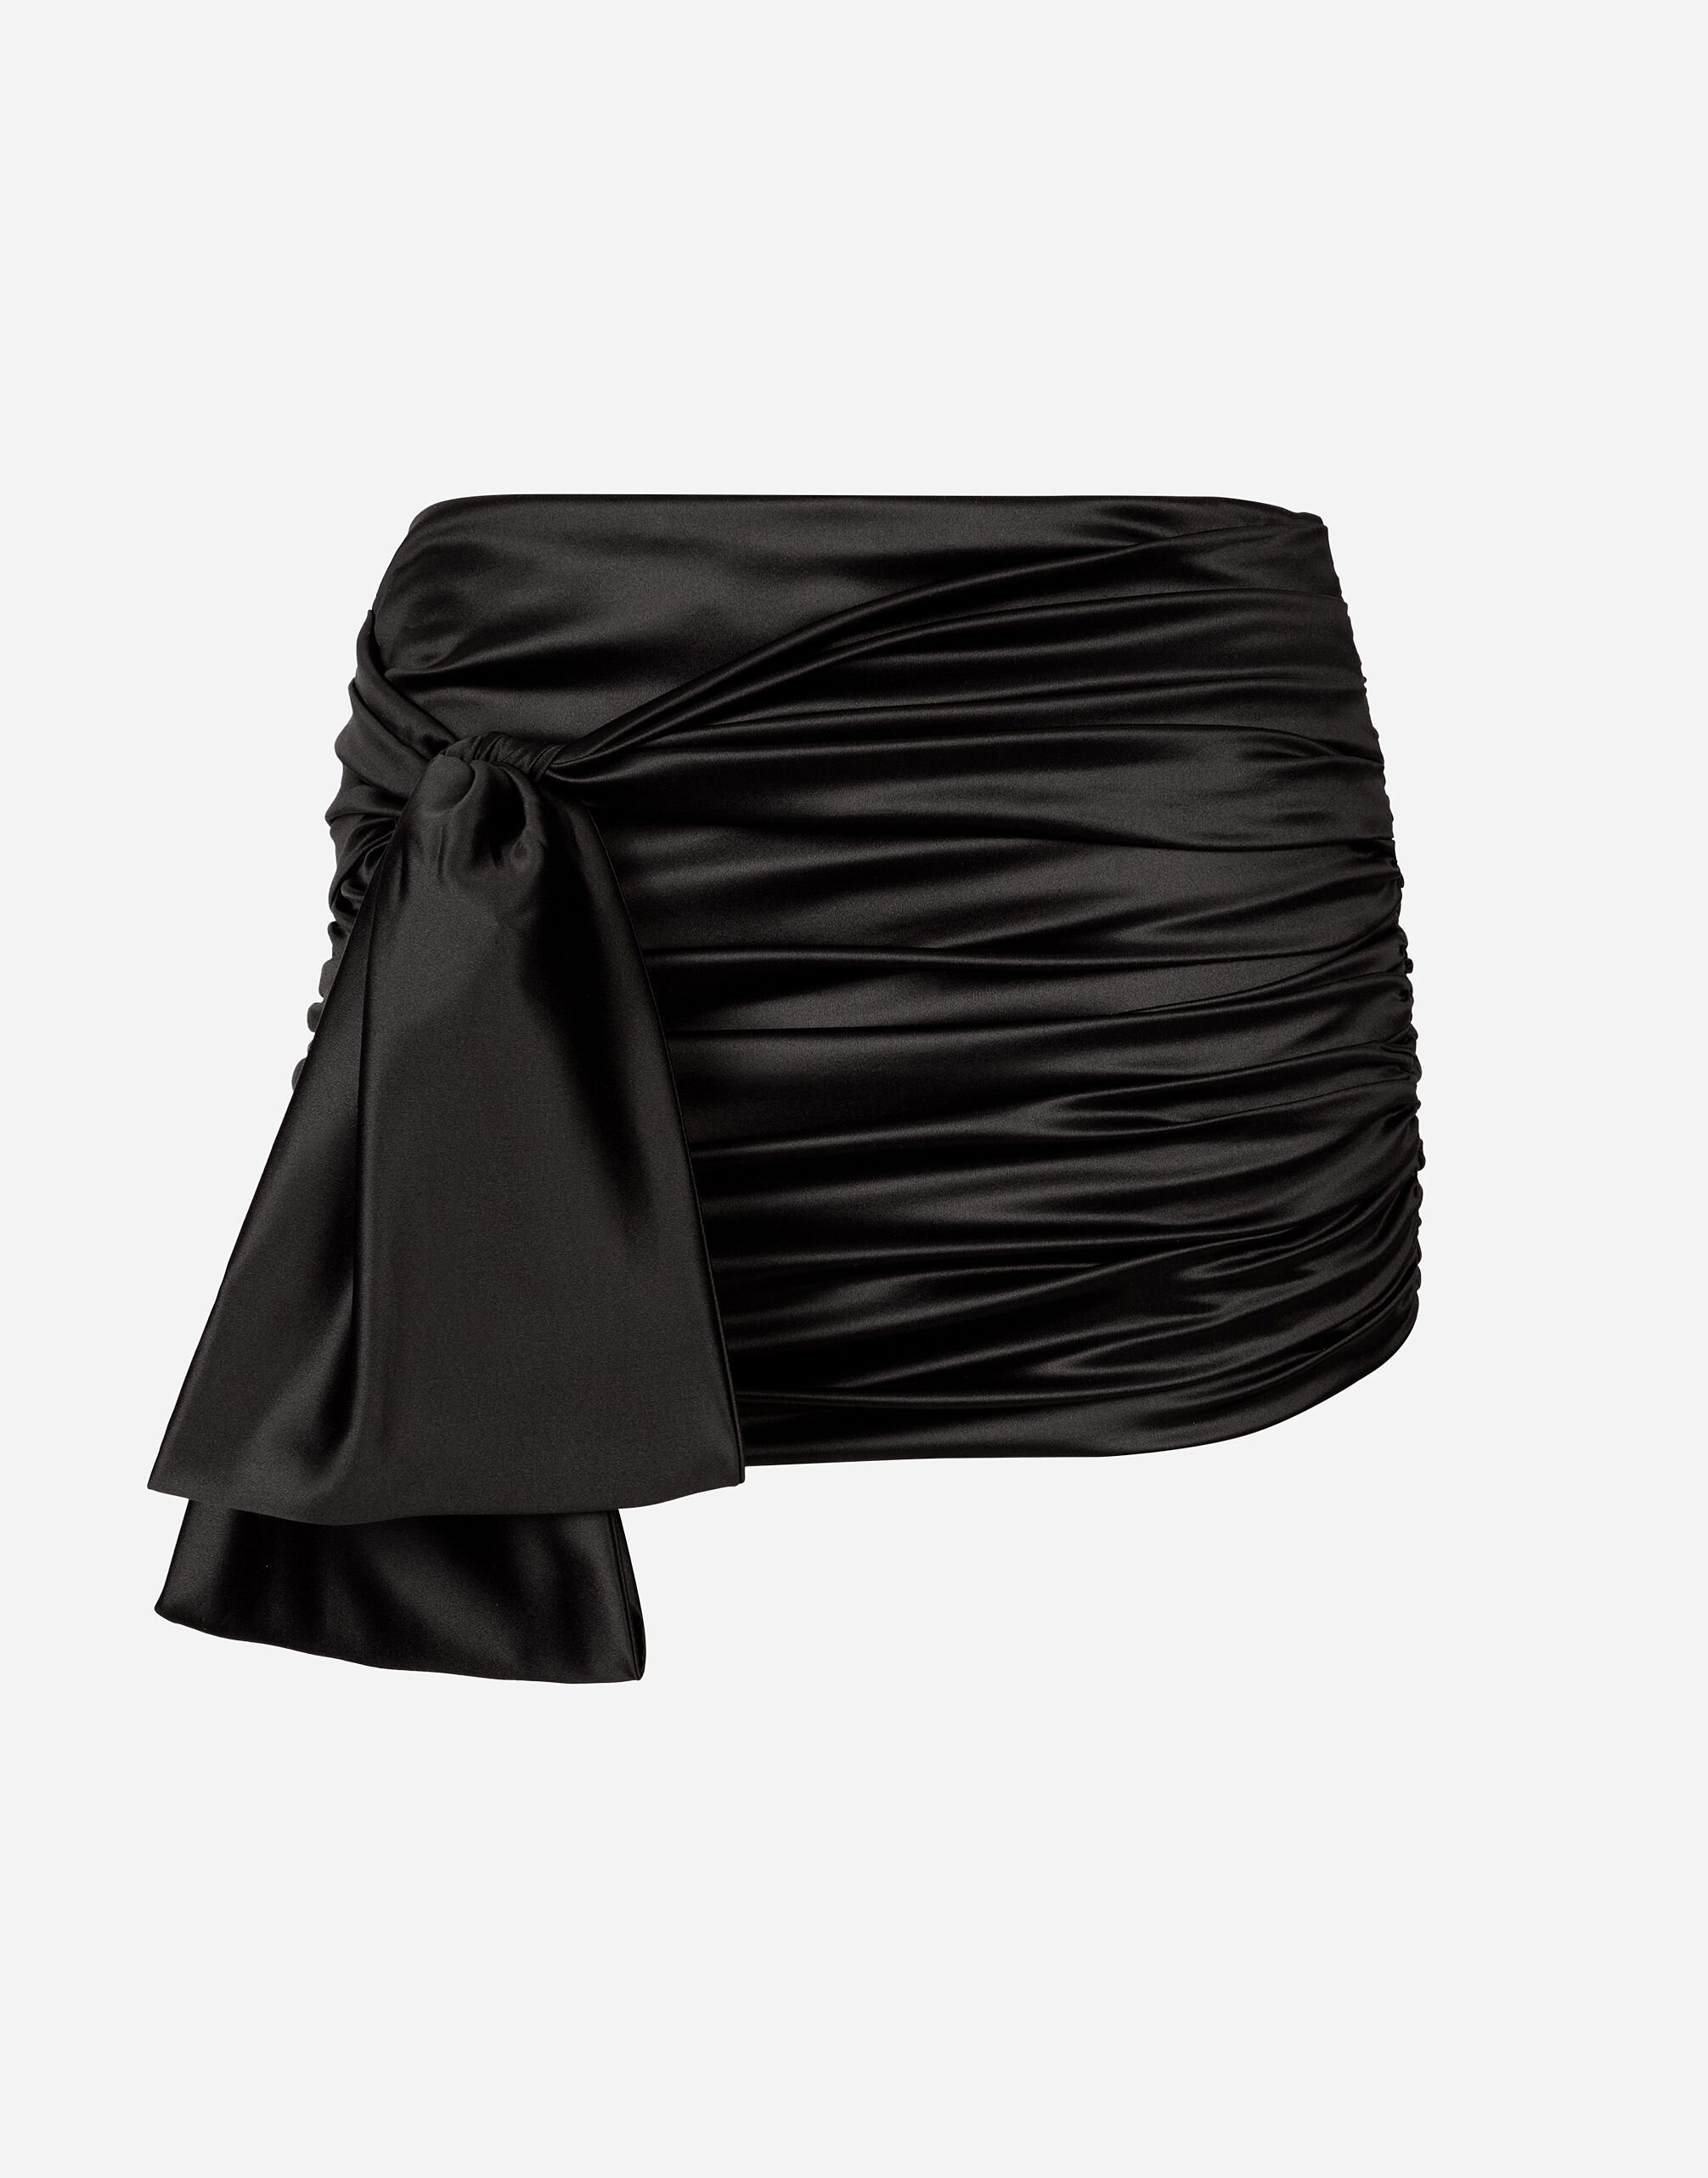 Dolce & Gabbana Short draped satin skirt with side bow Gold BB7544AY828